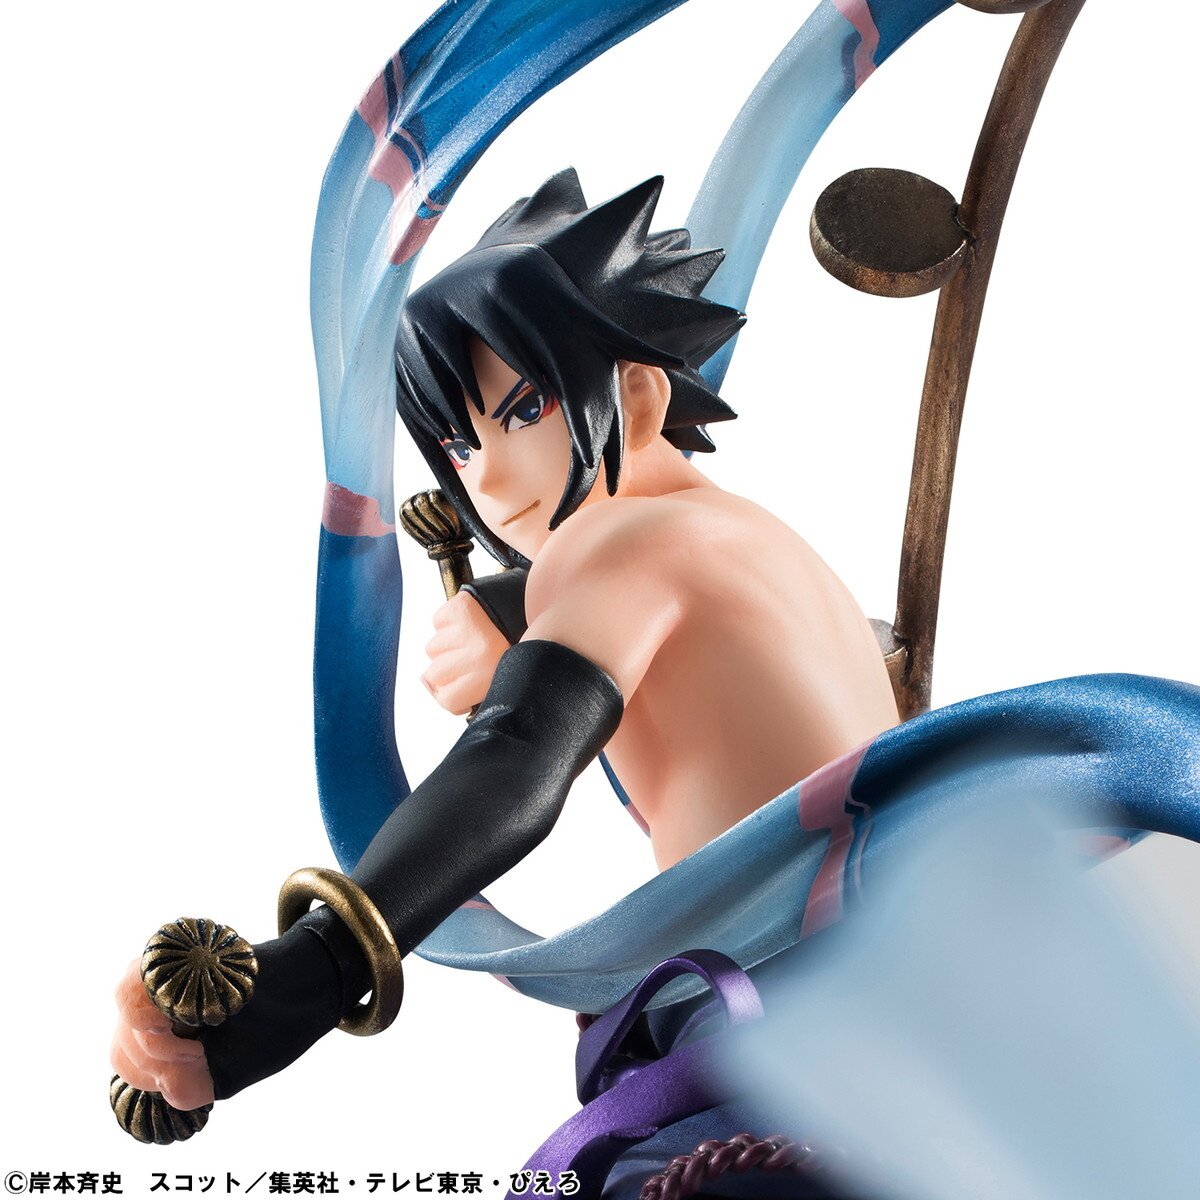 Naruto Shippuden G.E.M. Series PVC Figure - Sasuke Uchiha